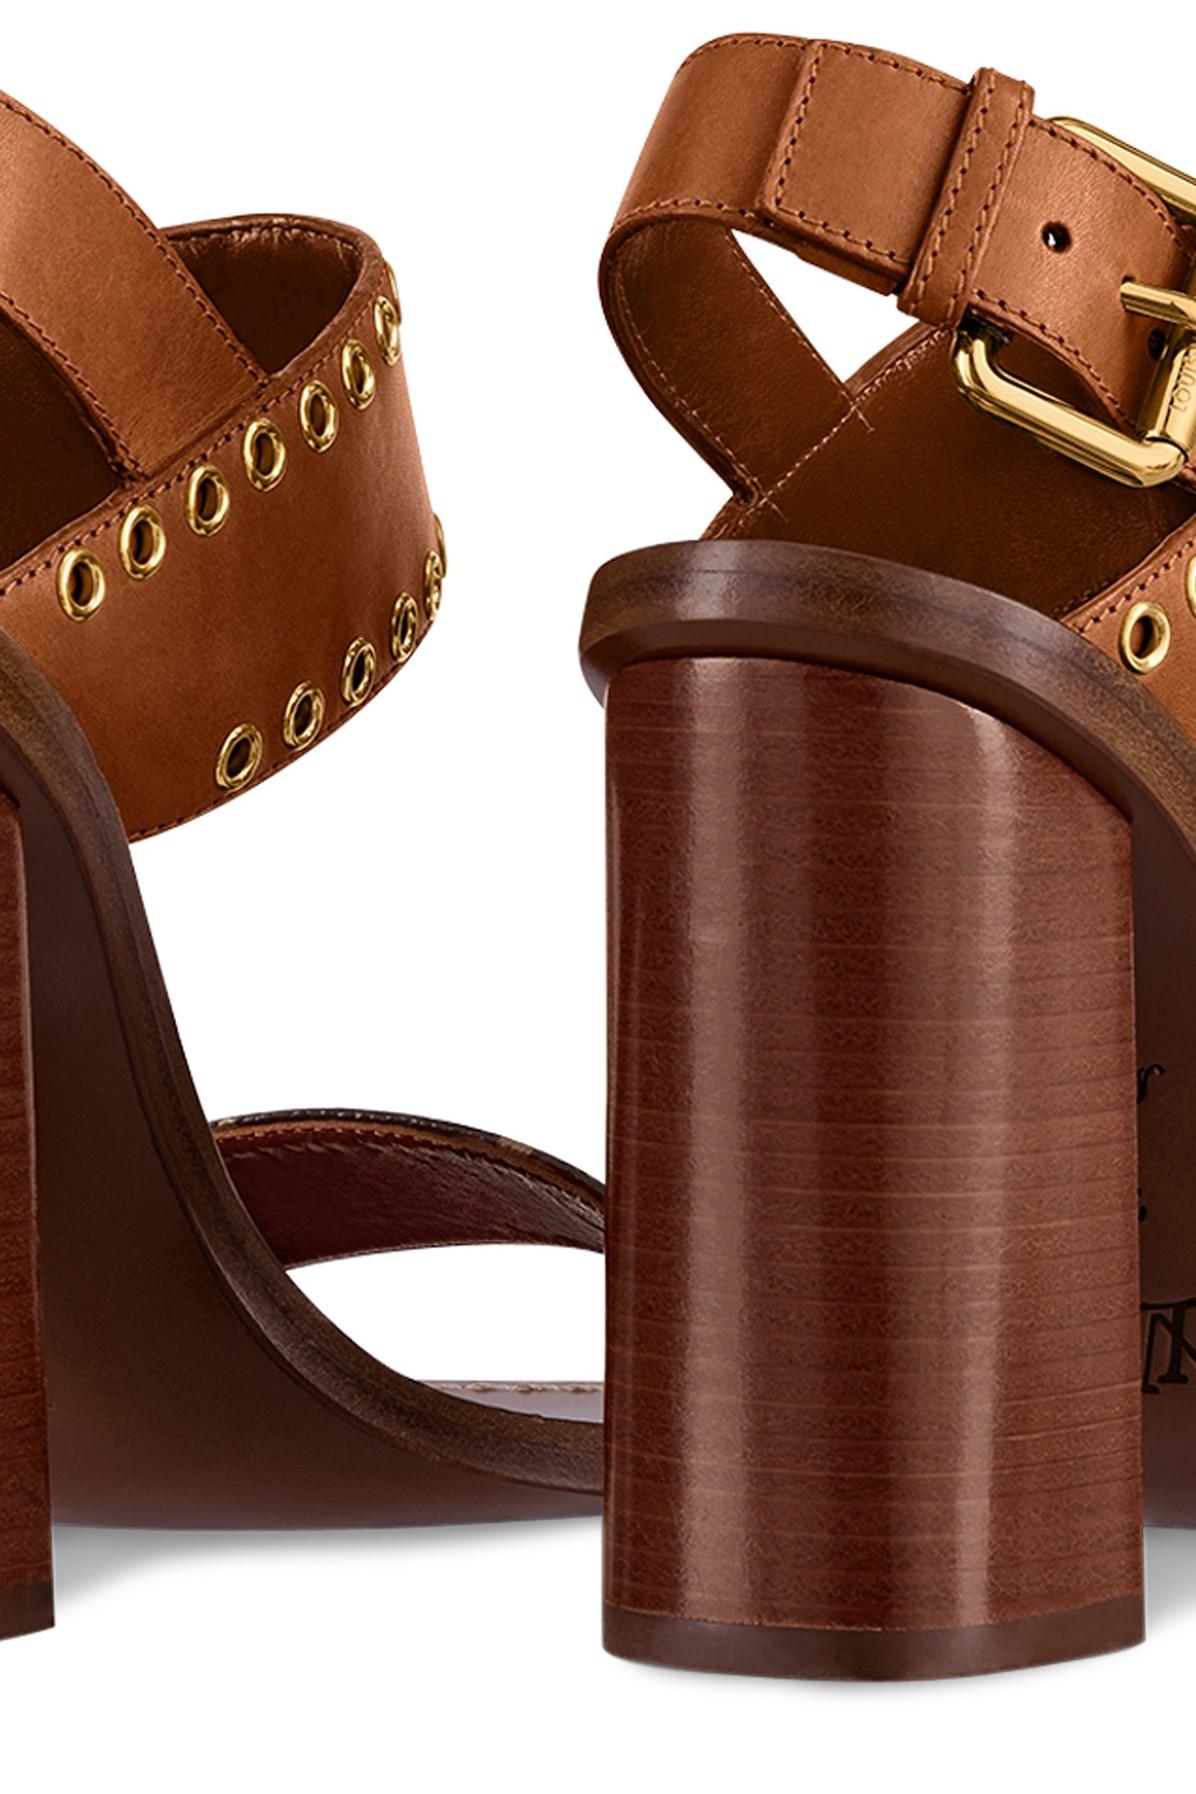 Passenger leather sandal Louis Vuitton Camel size 37 EU in Leather -  24634982